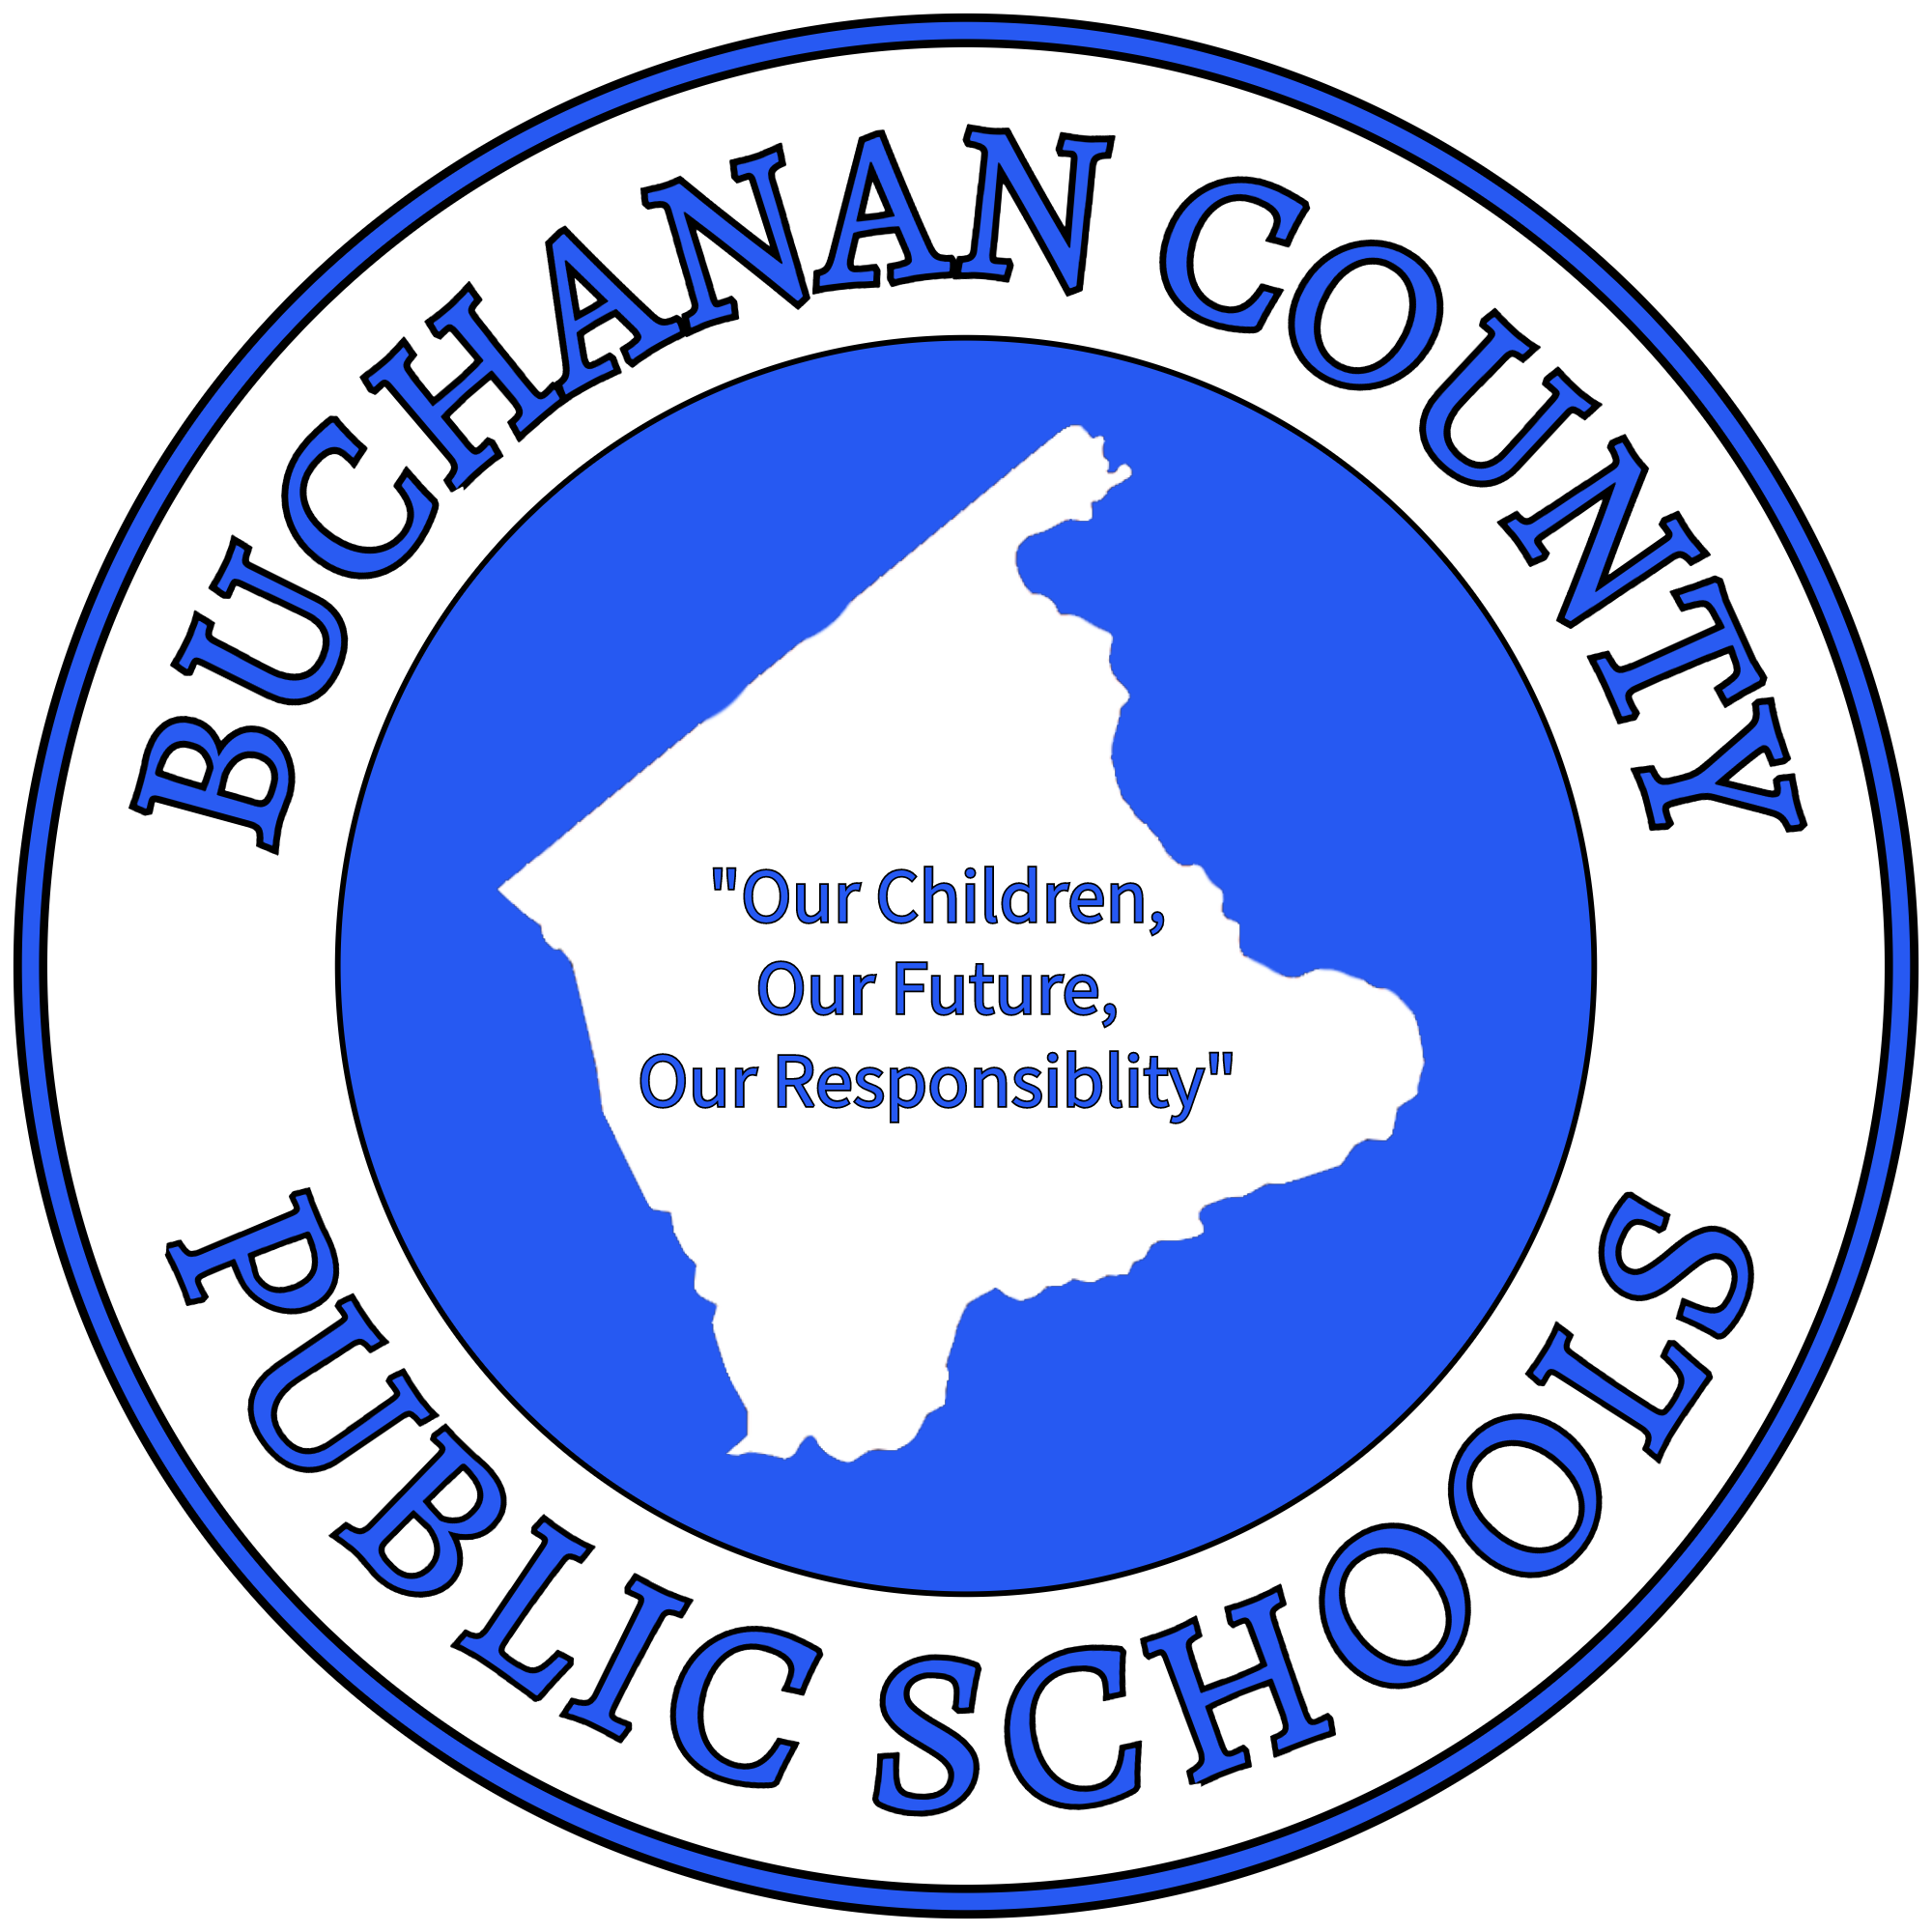 Buchanan County Public Schools's Logo